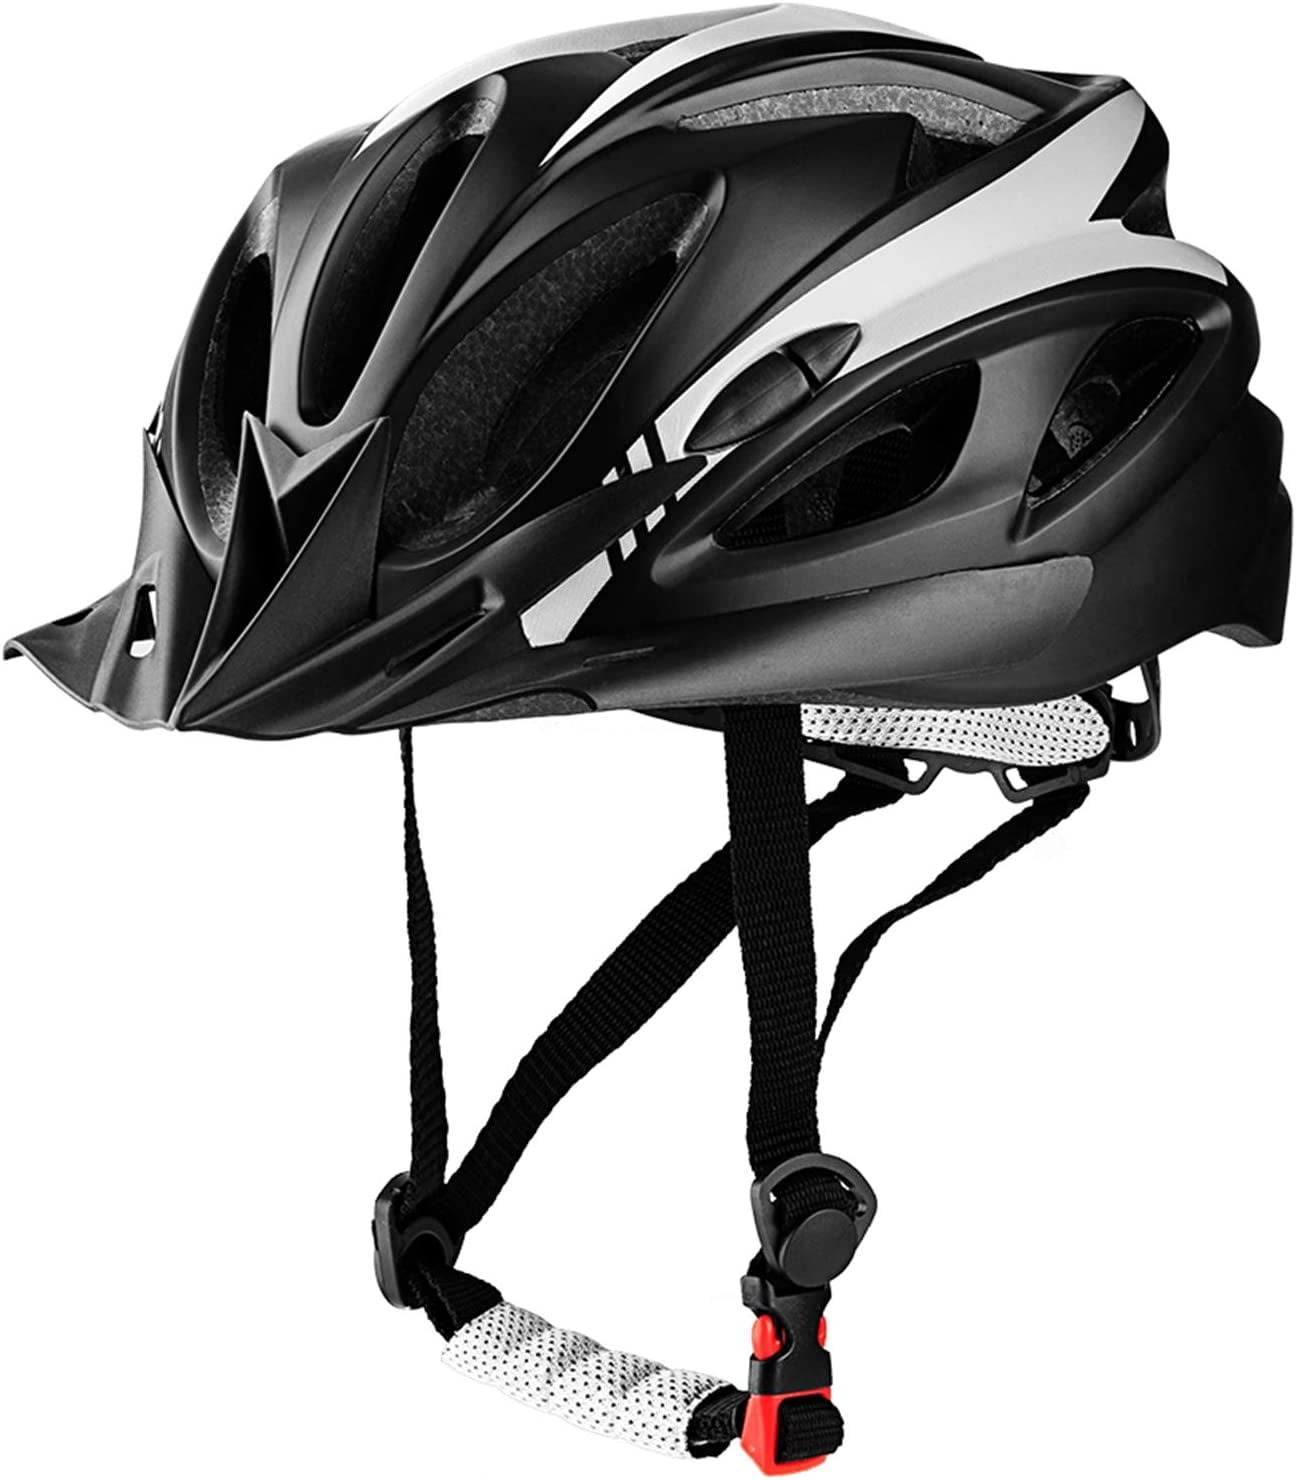 Bicycle Helmet Cycling Helmets Lightweight Road Bike Safety Helmet Protective